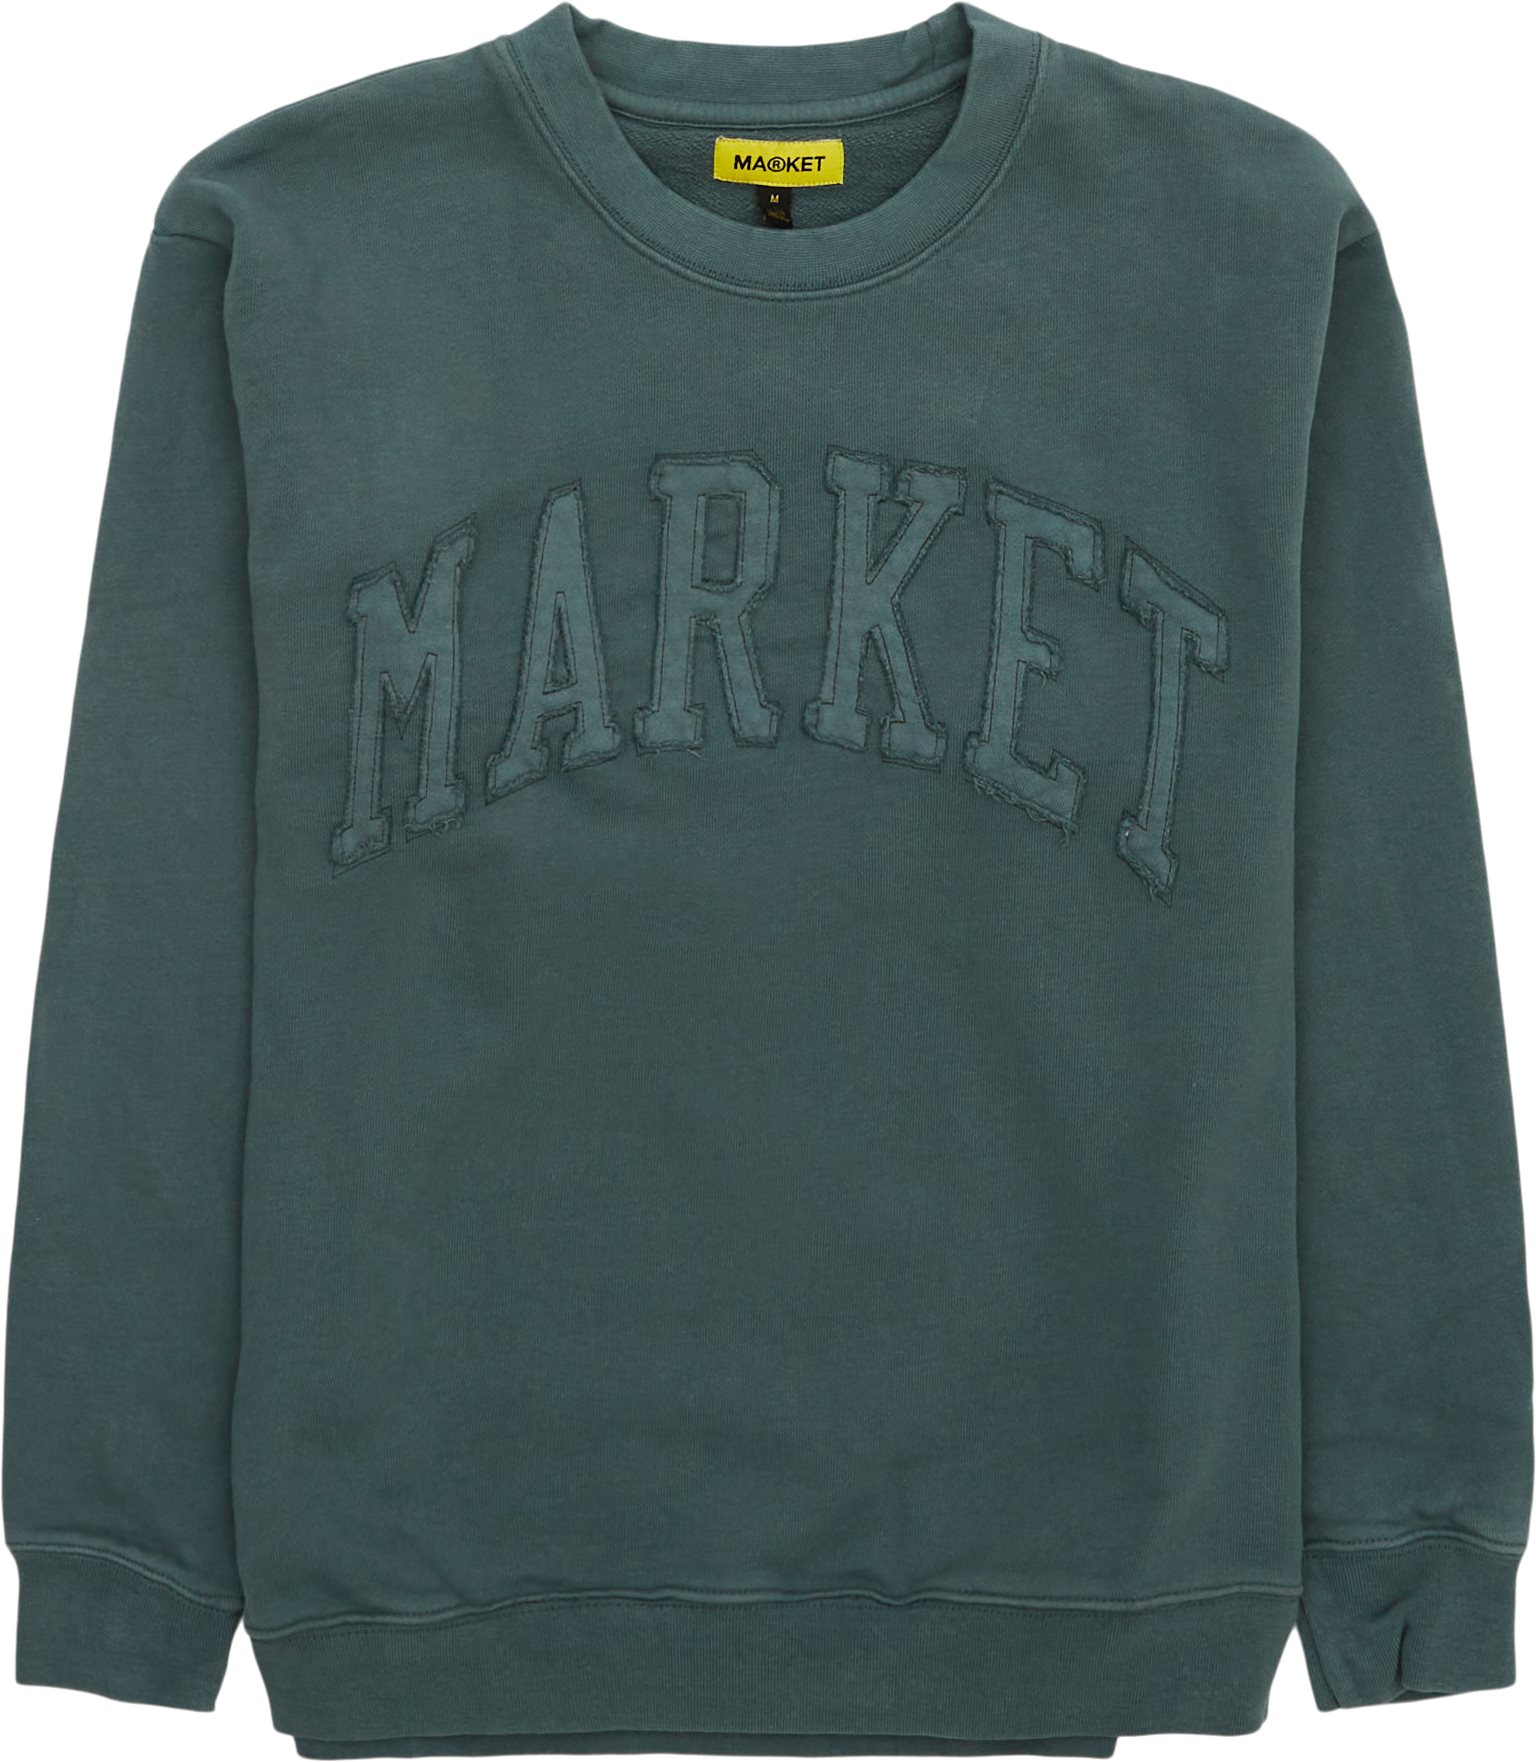 Market Sweatshirts MARKET VINTAGE WASH CREWNECK Green